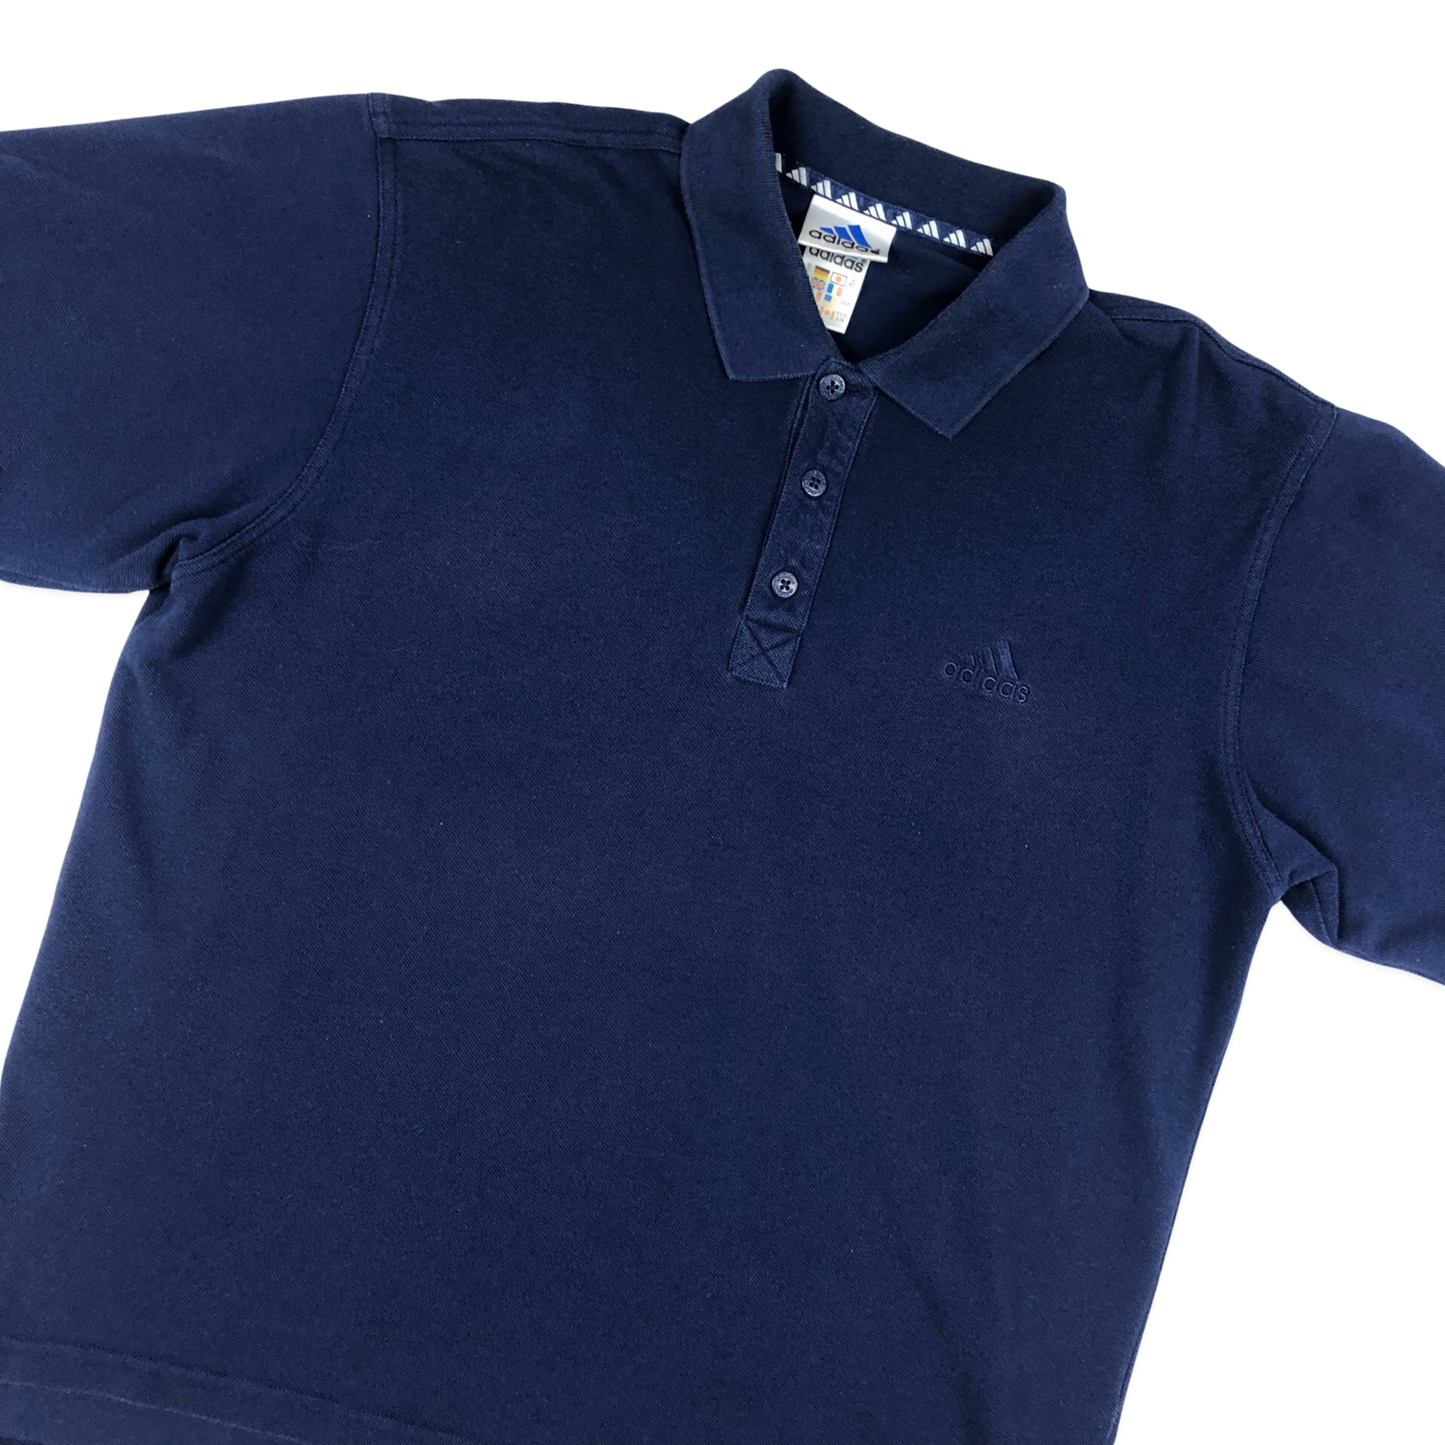 Vintage 90s Adidas Plain Navy Polo Shirt XL